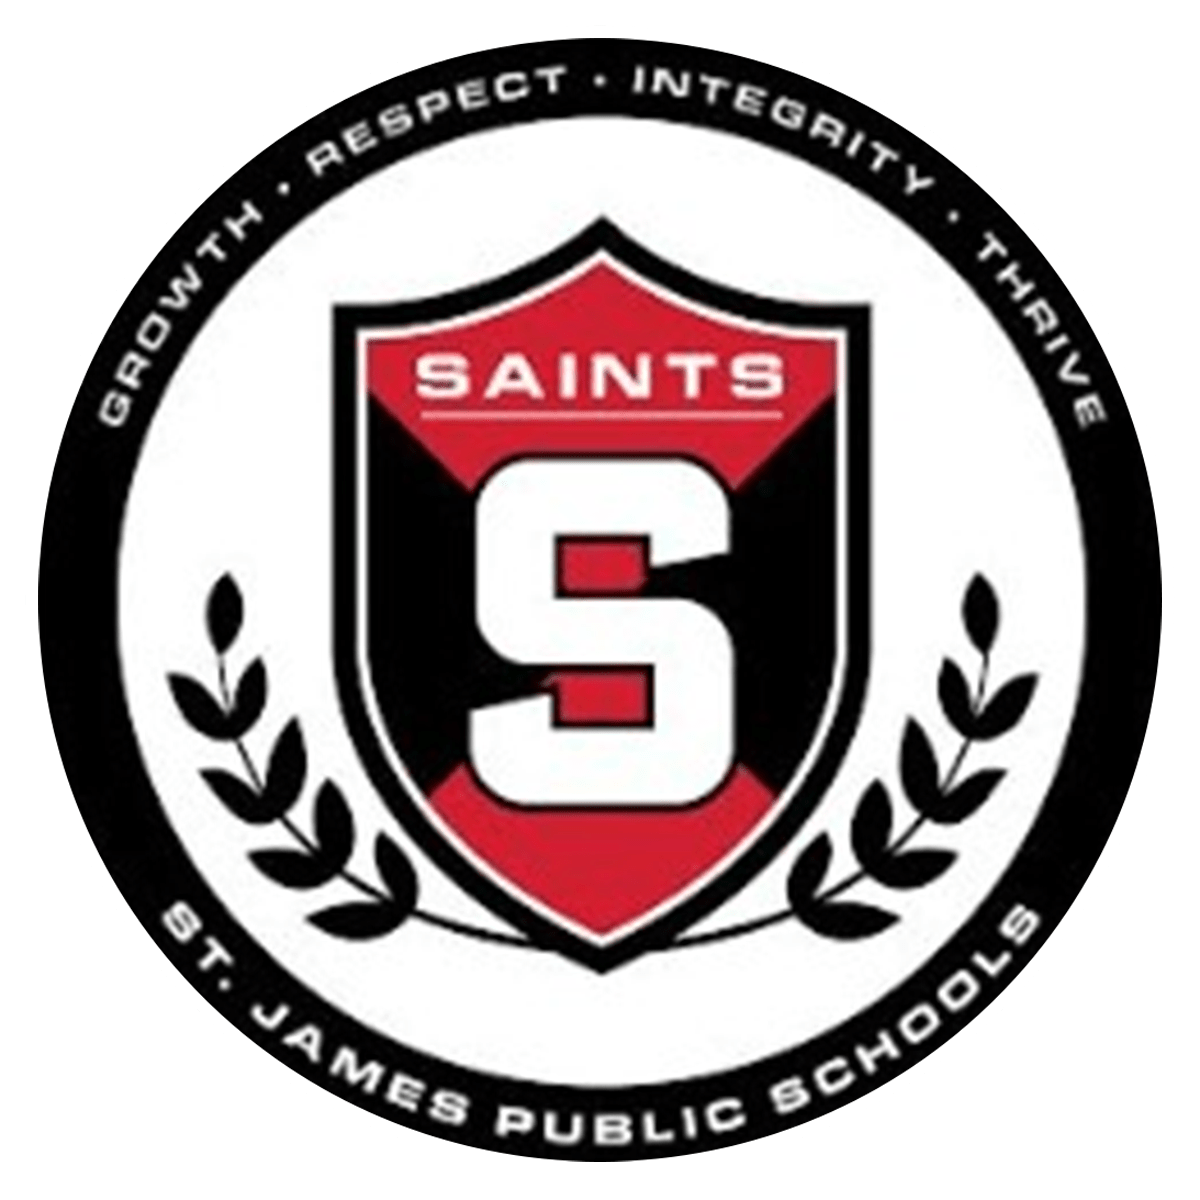 St James Public Schools Logo